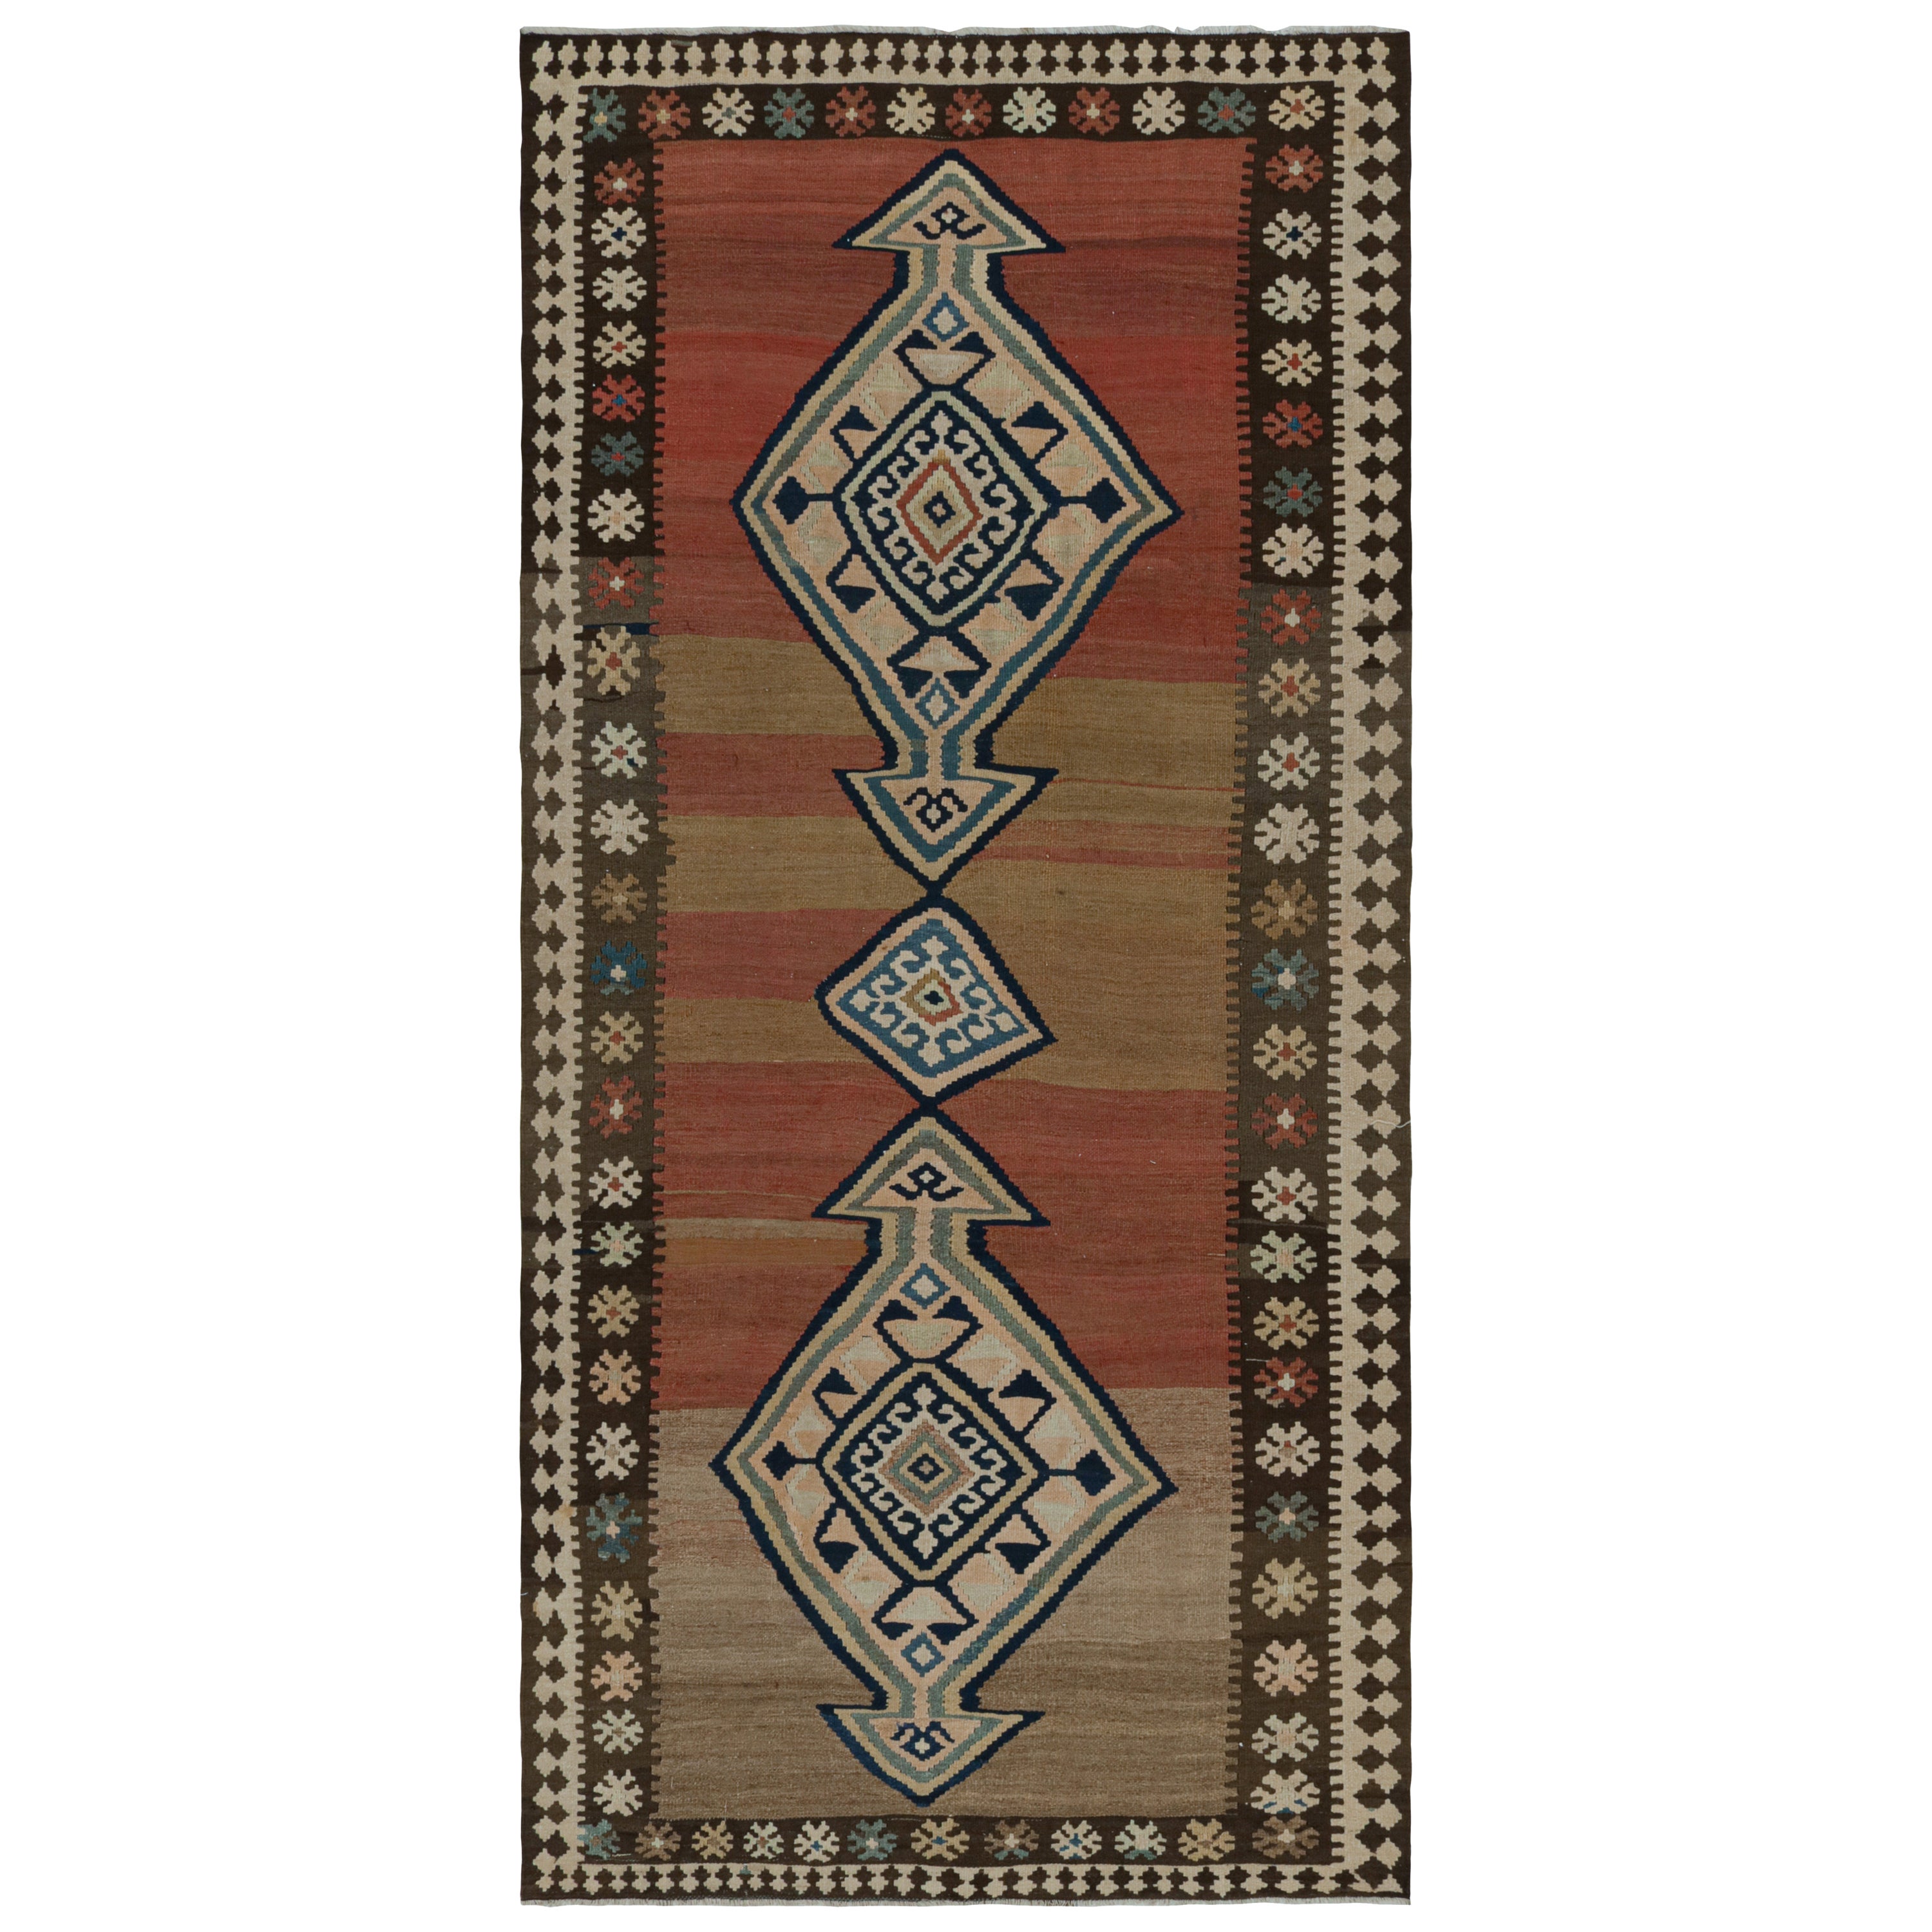 Vintage Persian Kilim rug in Brown, Red & Blue Tribal Patterns by Rug & Kilim For Sale